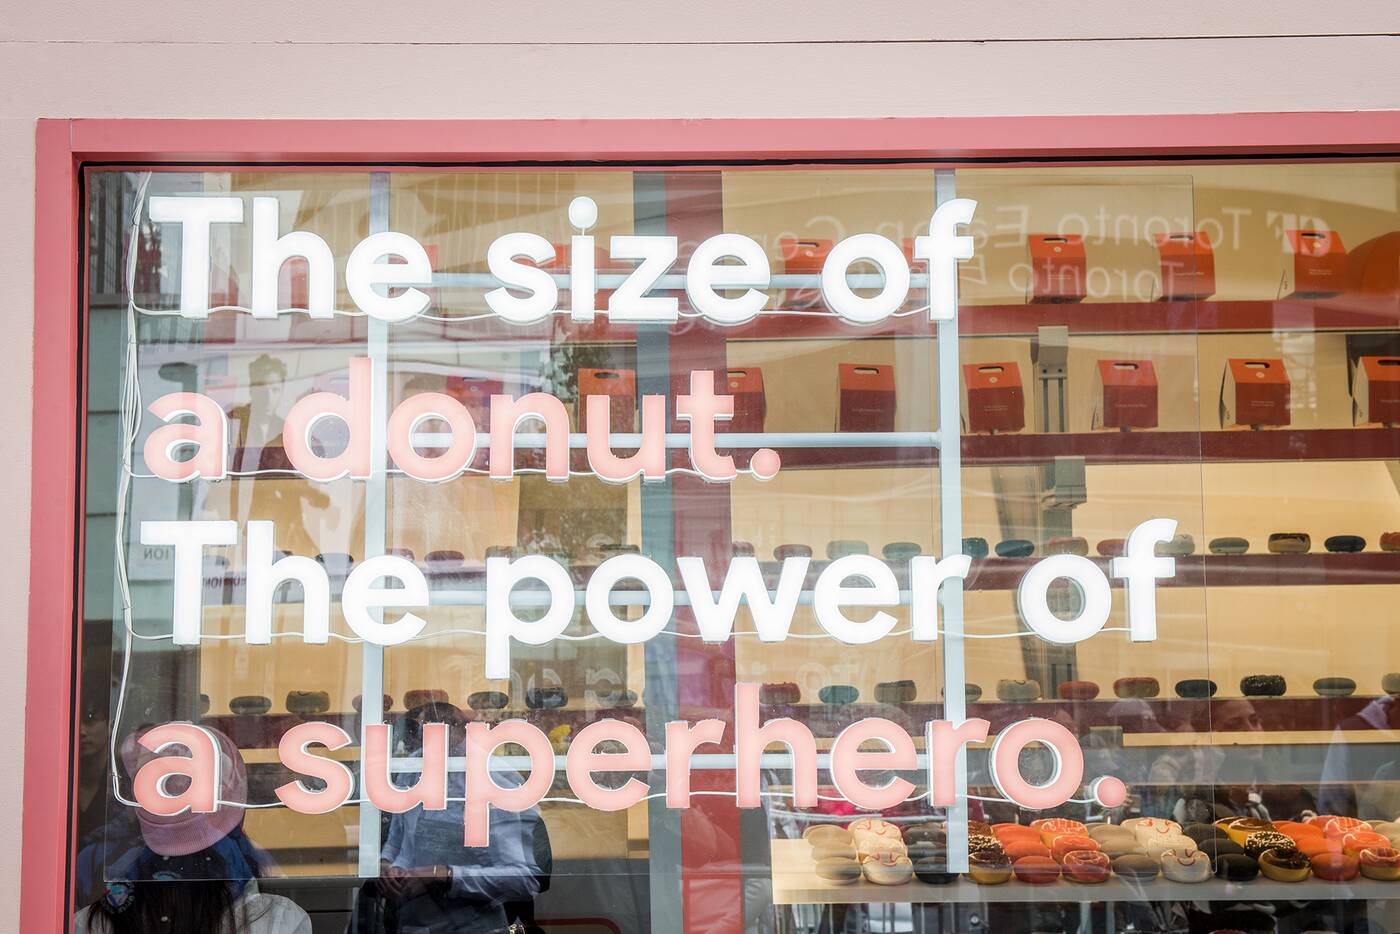 Google Donut shop